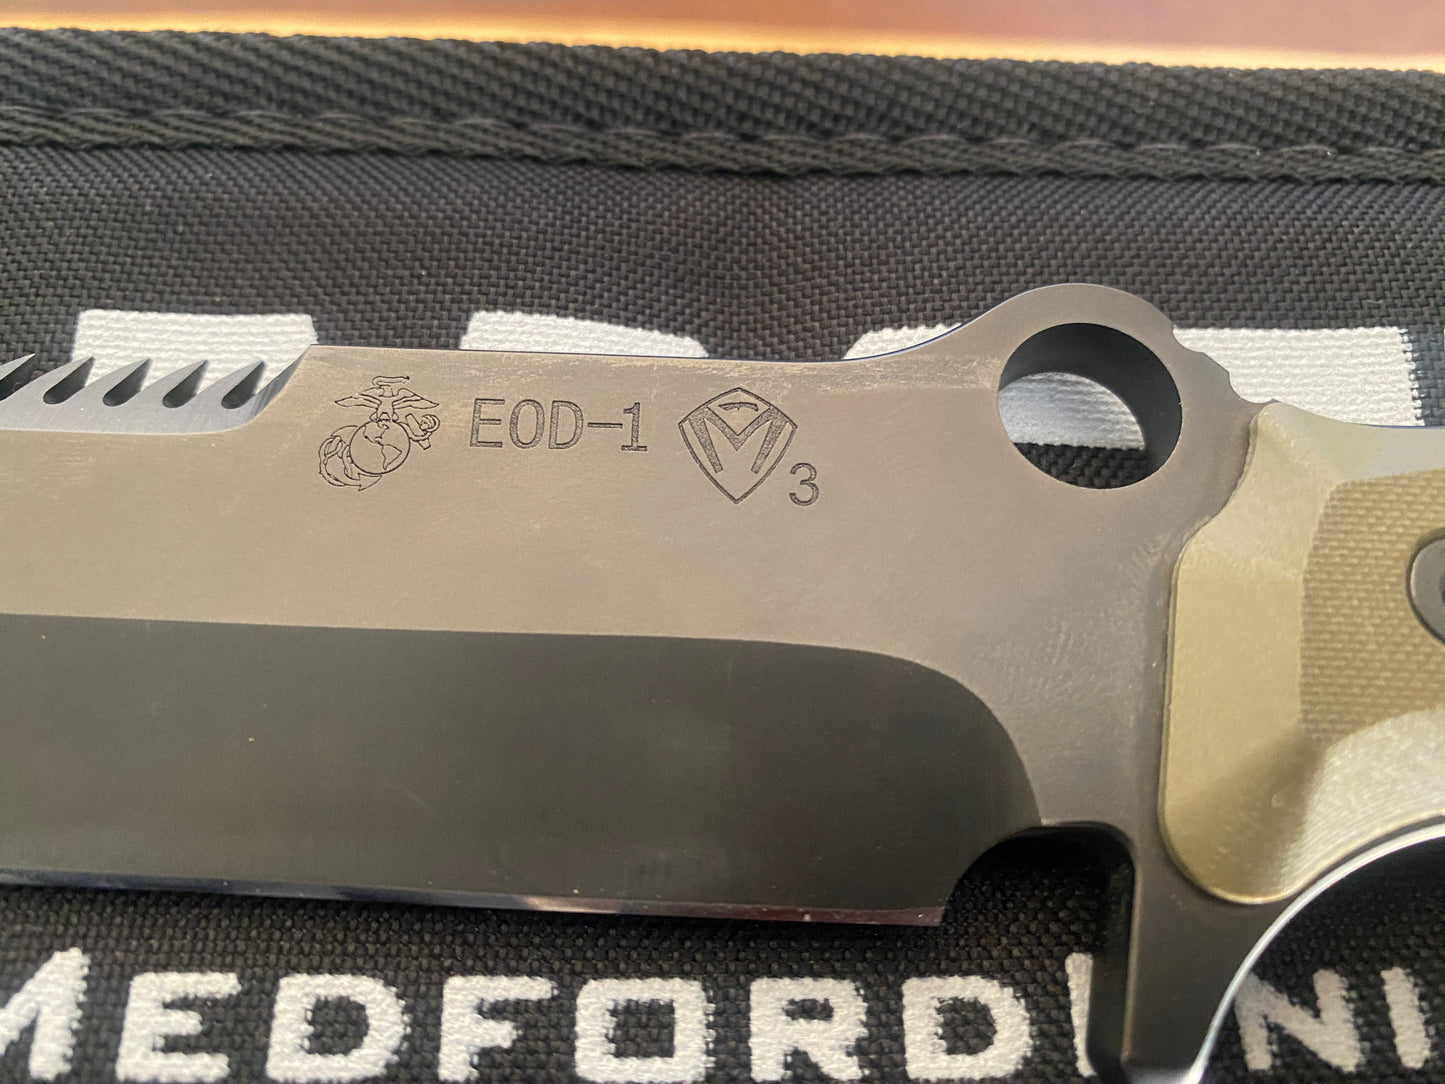 Medford USMC EOD-1 Sheath knife